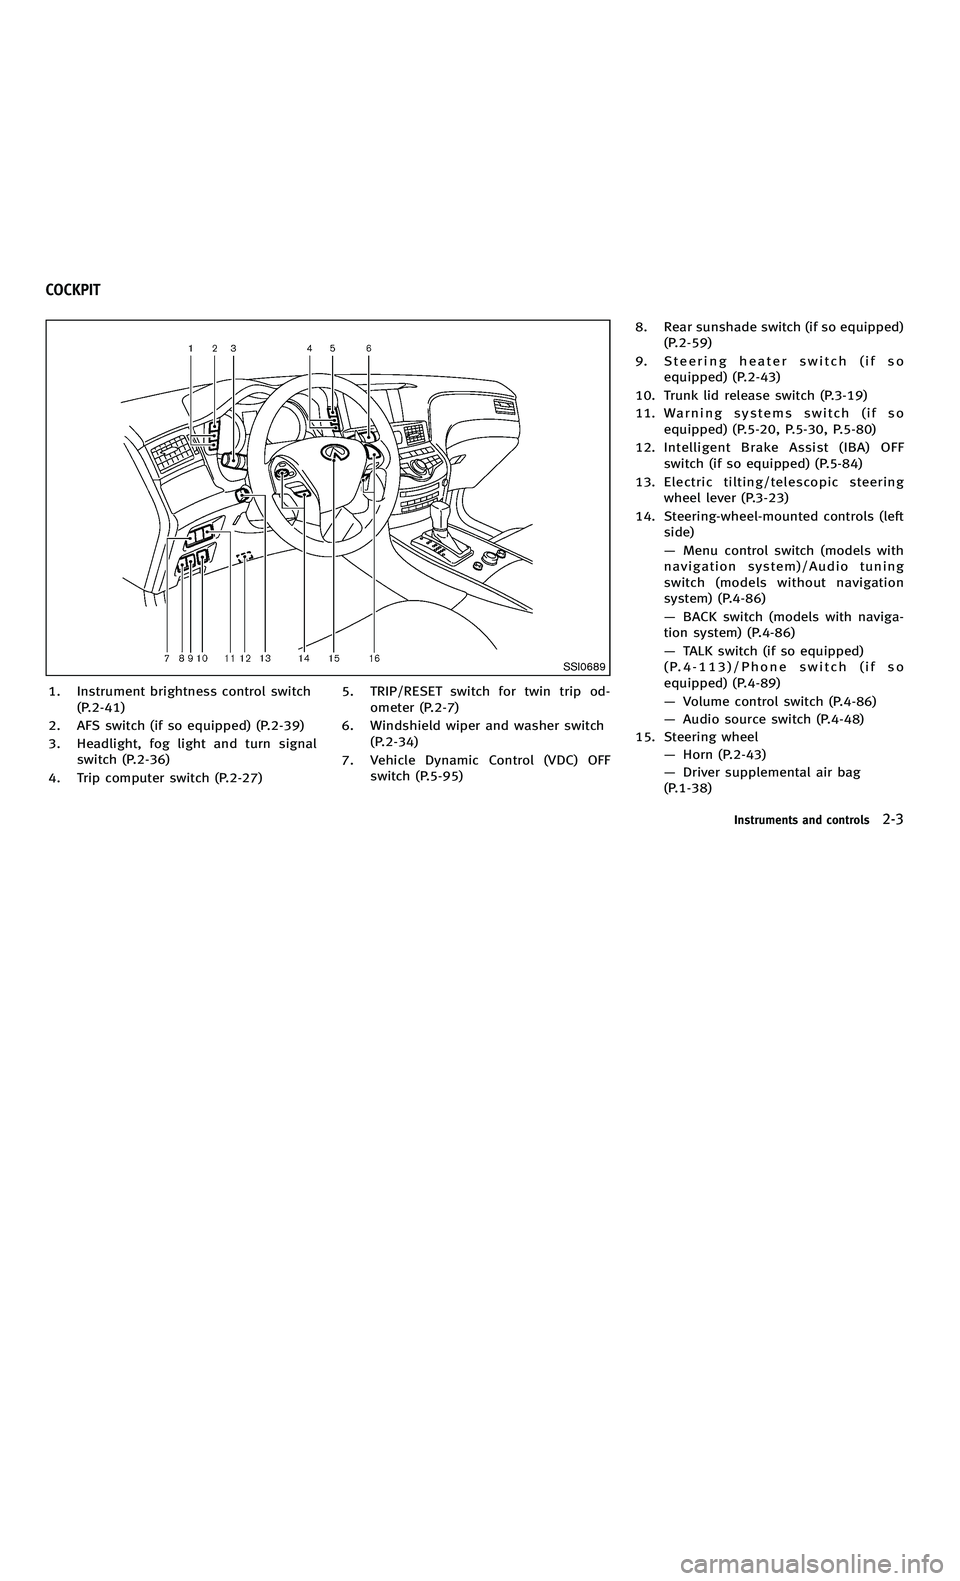 INFINITI M-HEV 2012  Owners Manual 858763.psp Nissan Infiniti OM OM2E HY51U0 Hybrid 1" gutter 12/21/2010 14\
:36:44 44 A
SSI0689
1. Instrument brightness control switch(P.2-41)
2. AFS switch (if so equipped) (P.2-39)
3. Headlight, fog 